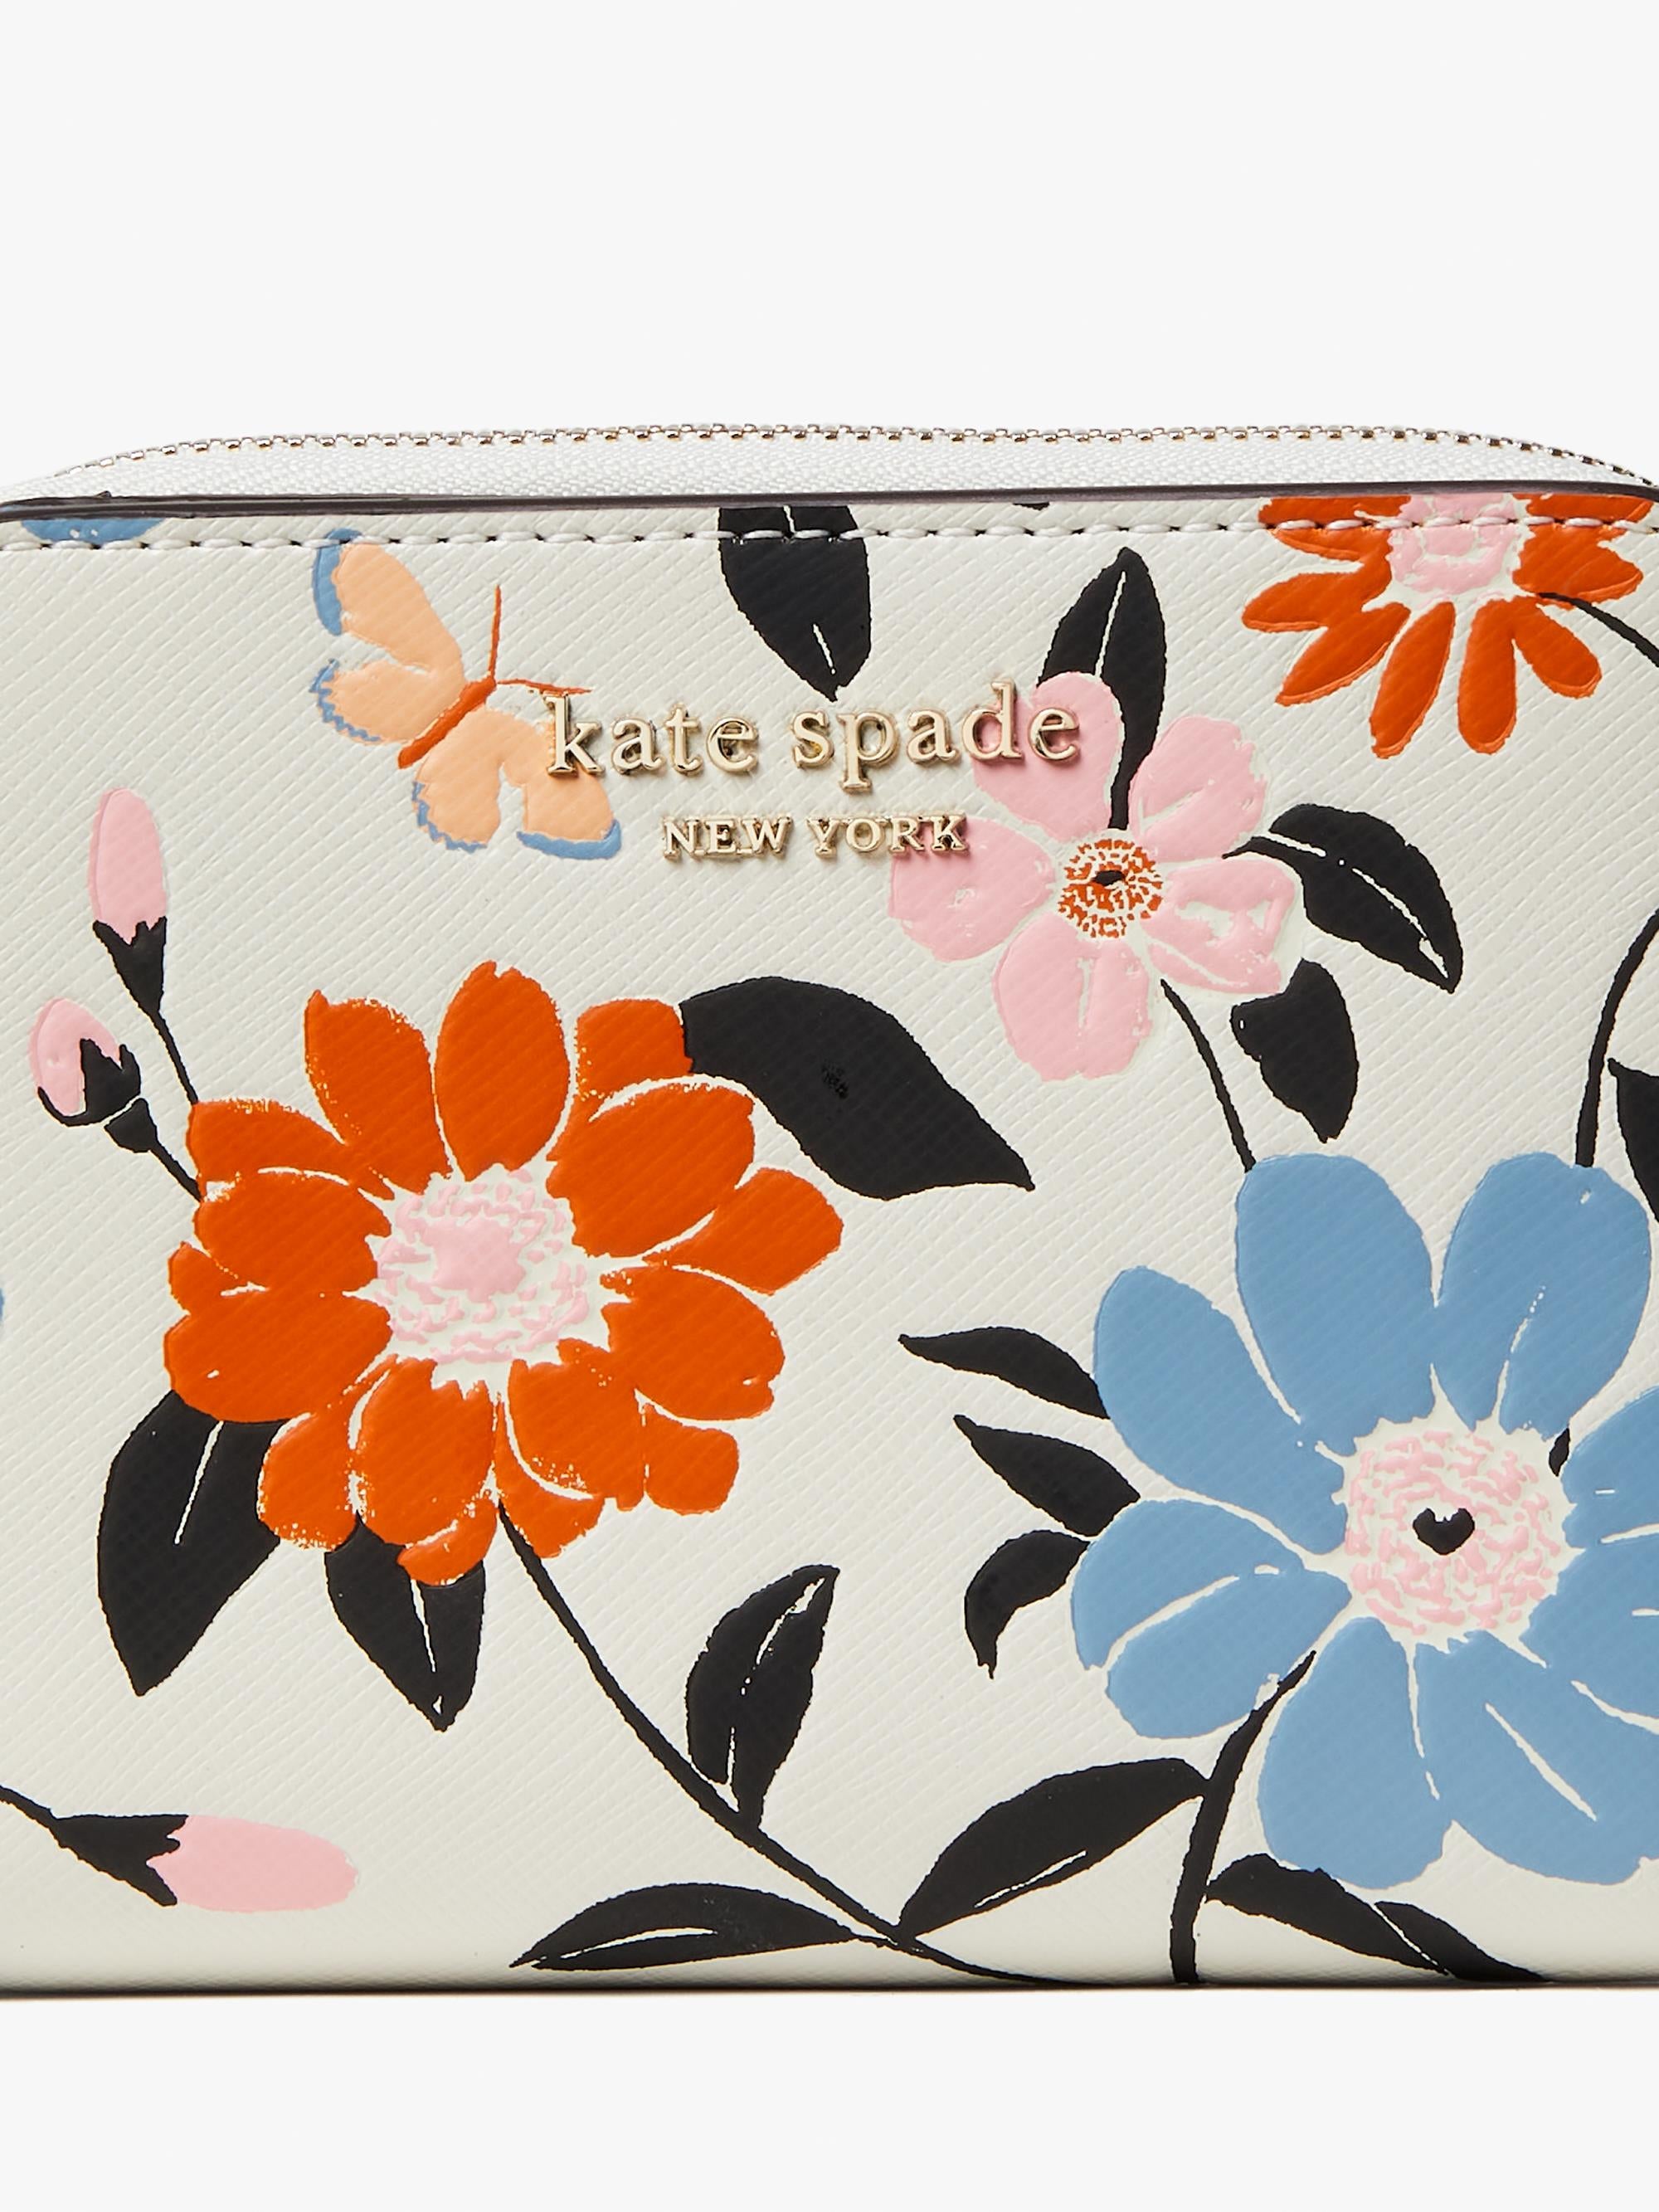 Spencer Floral Garden Embossed Compact Wallet